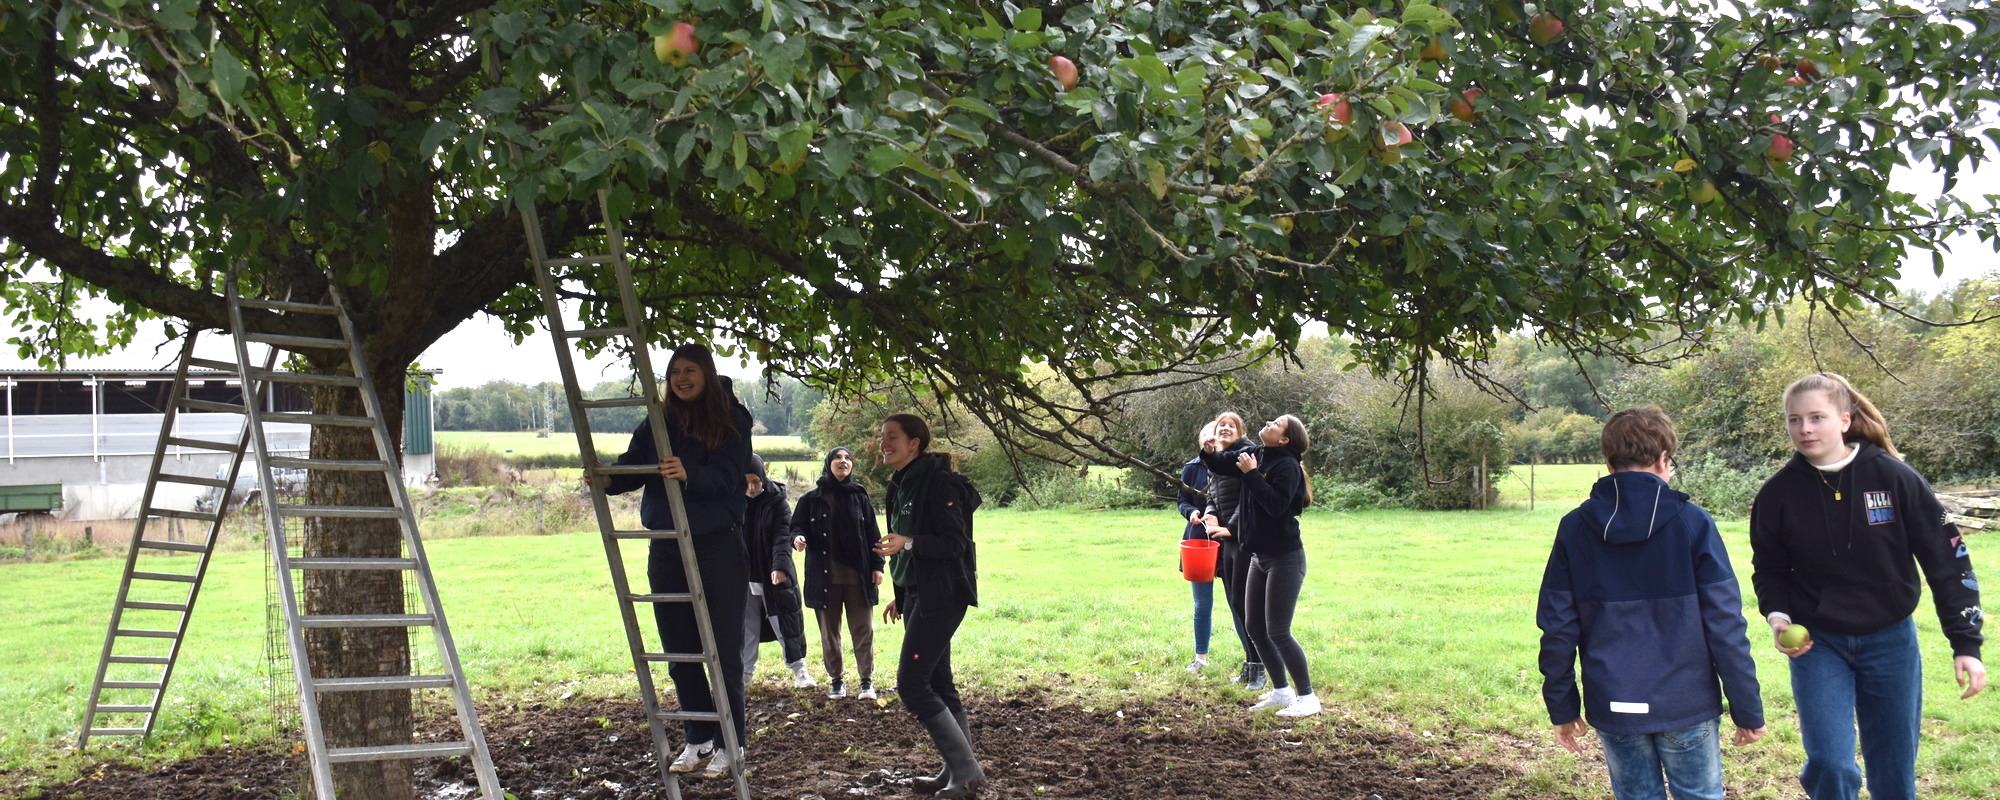 Apple harvest on orchard meadows